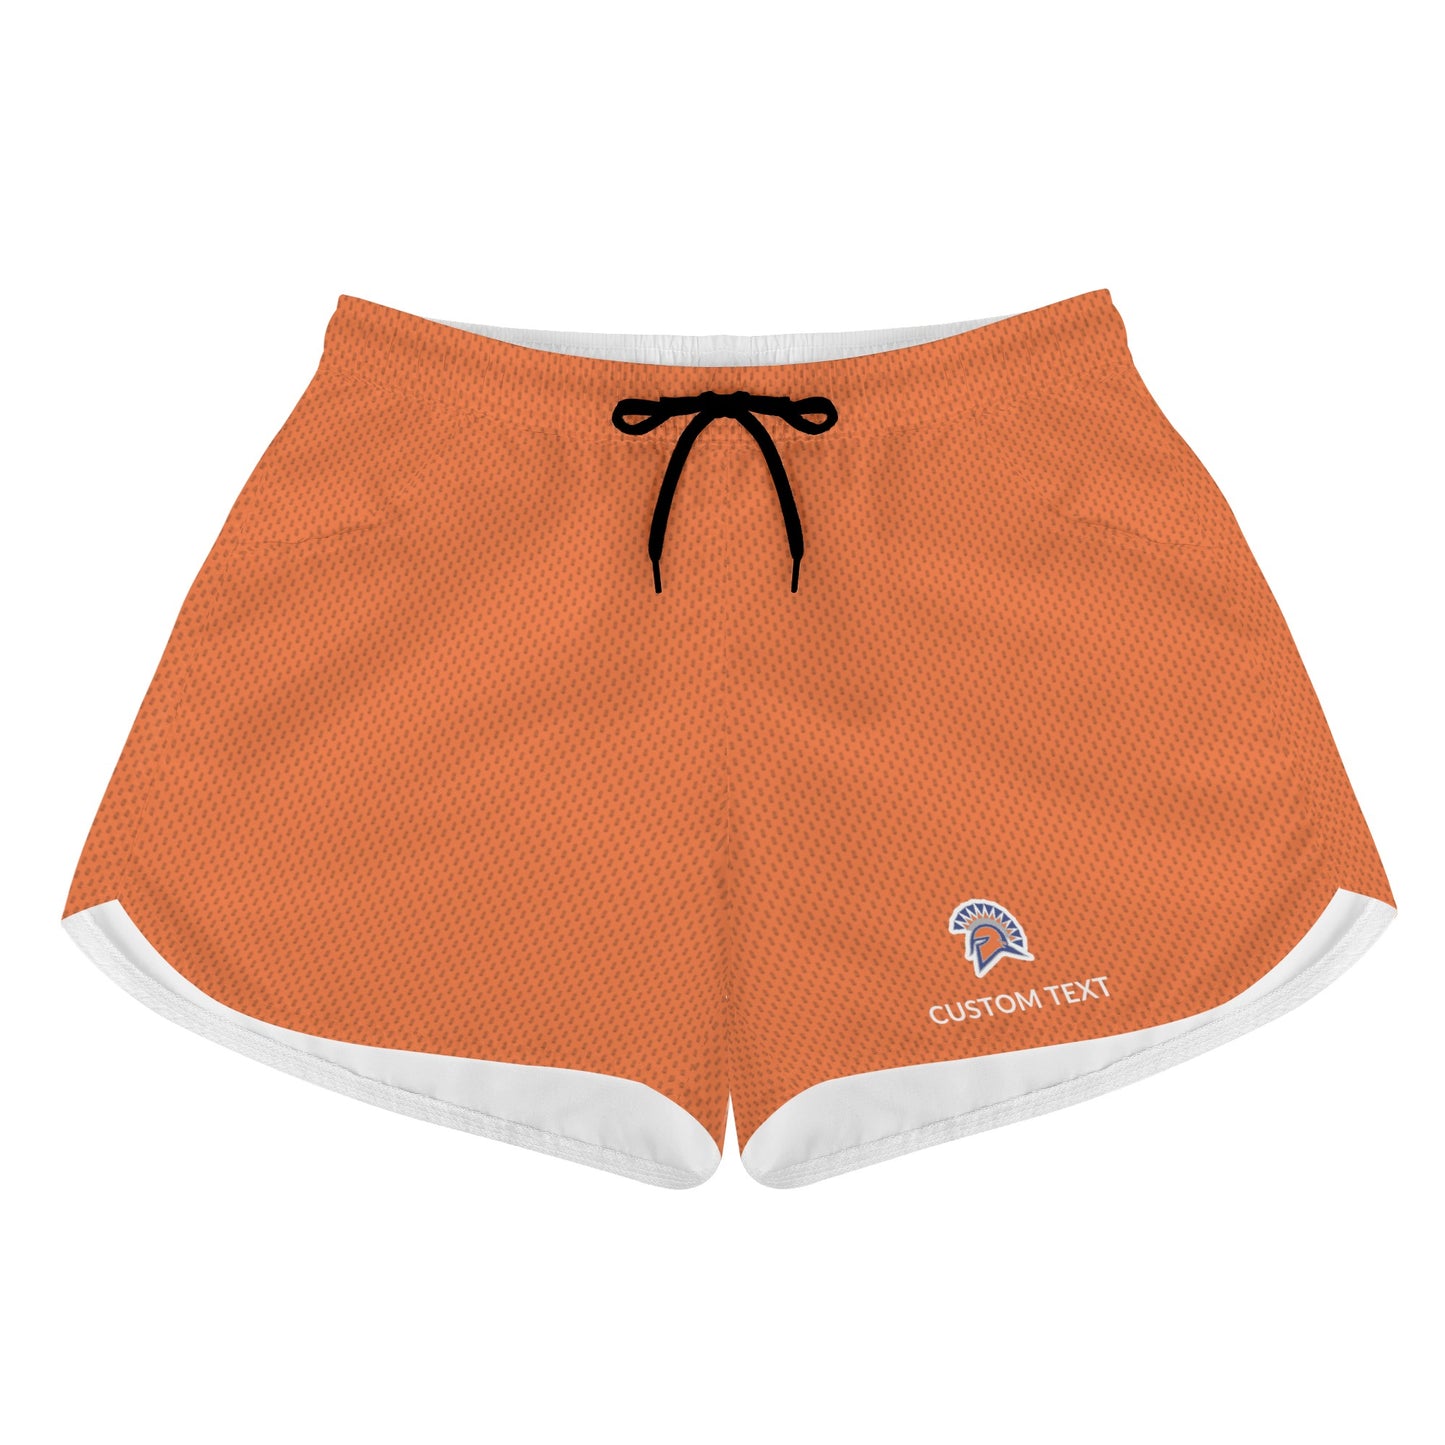 SLHS - Women's Beach/Dive/Swim Shorts